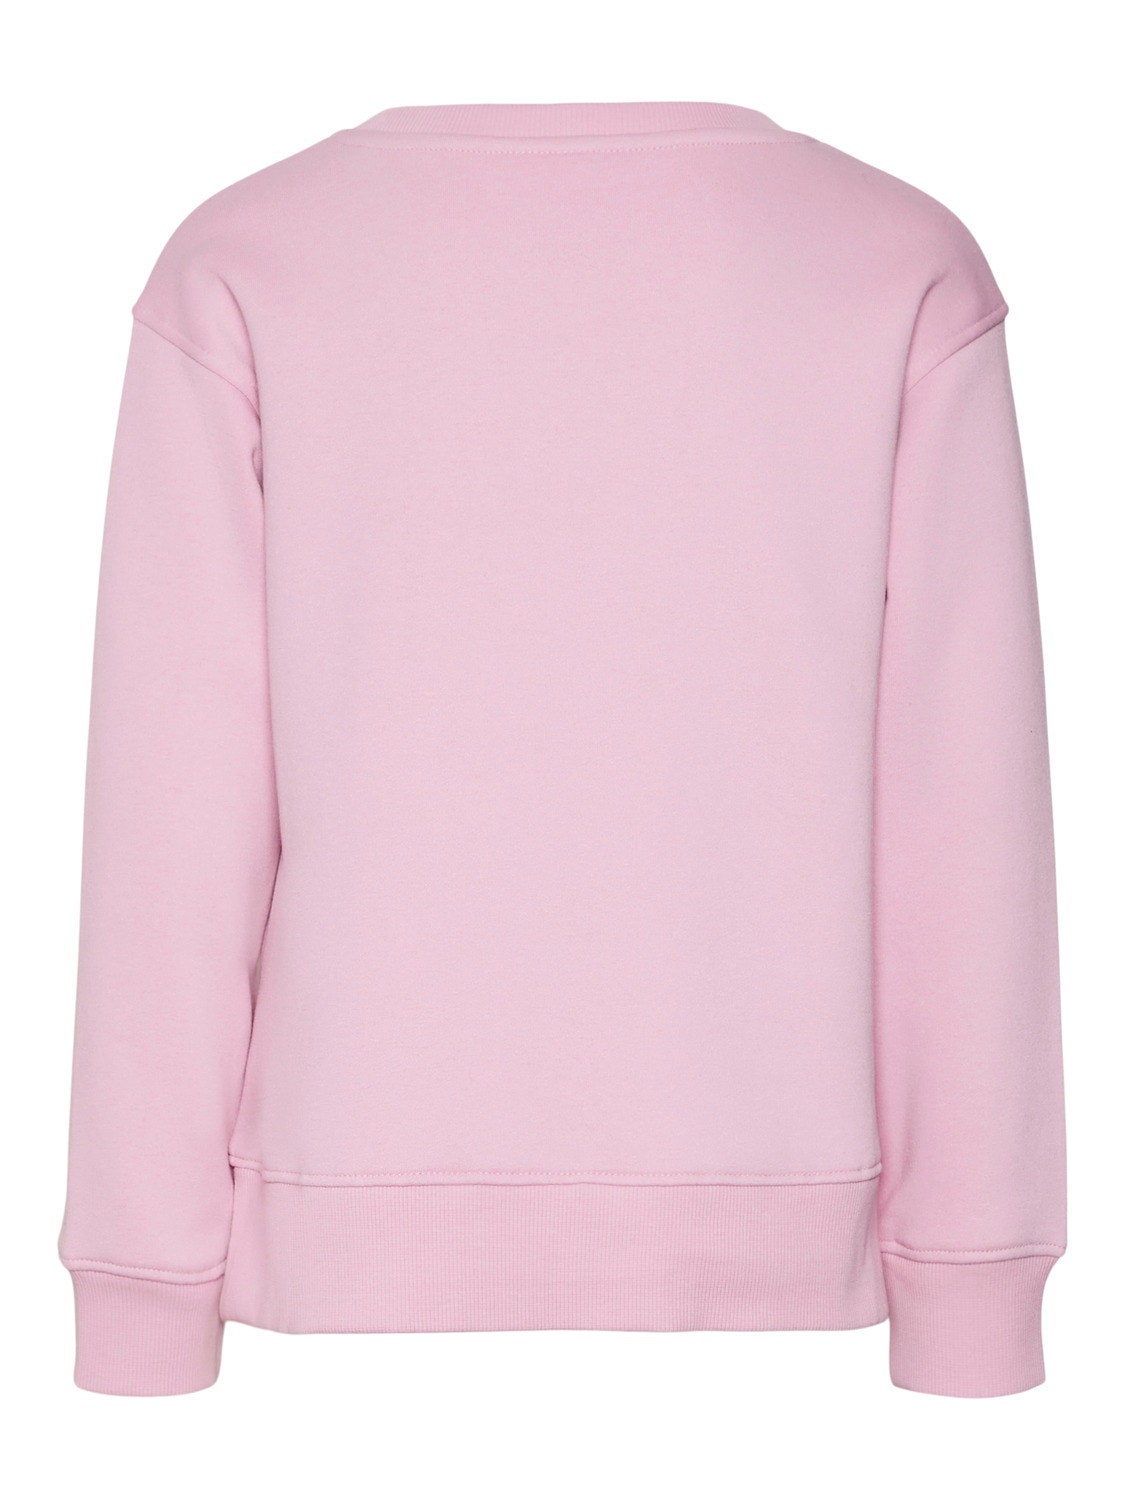 Vero Moda VMLINSEY Sweatshirt -Pastel Lavender - 10303725